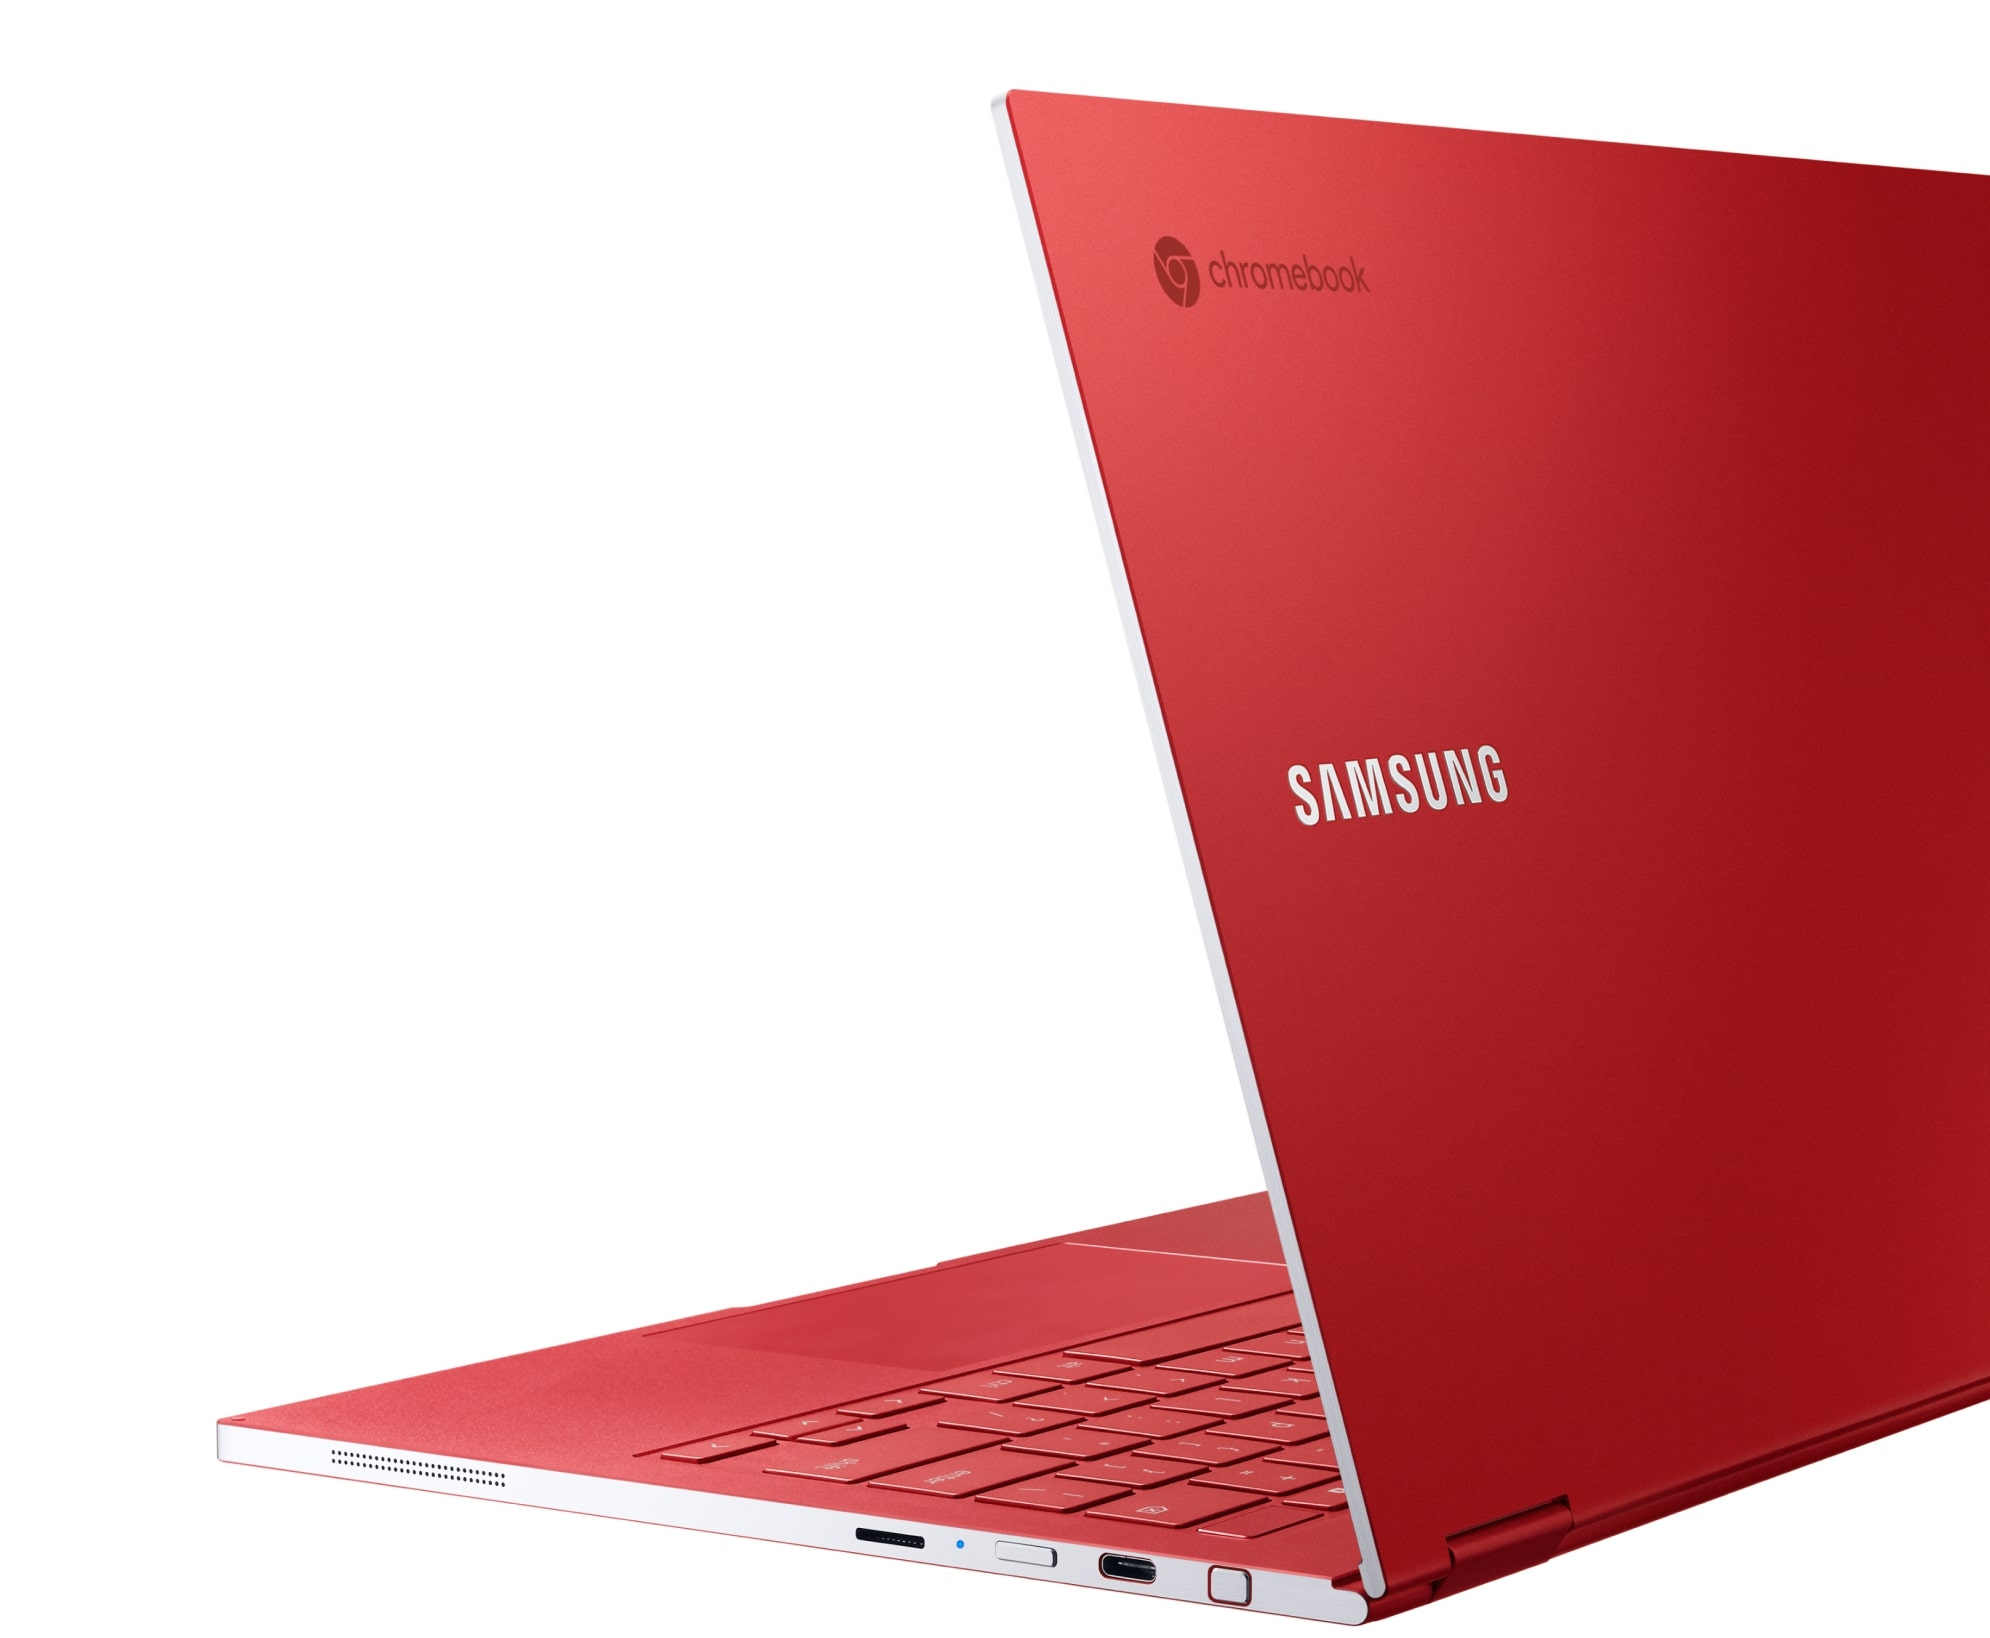 Samsung Galaxy Chromebook side red version.